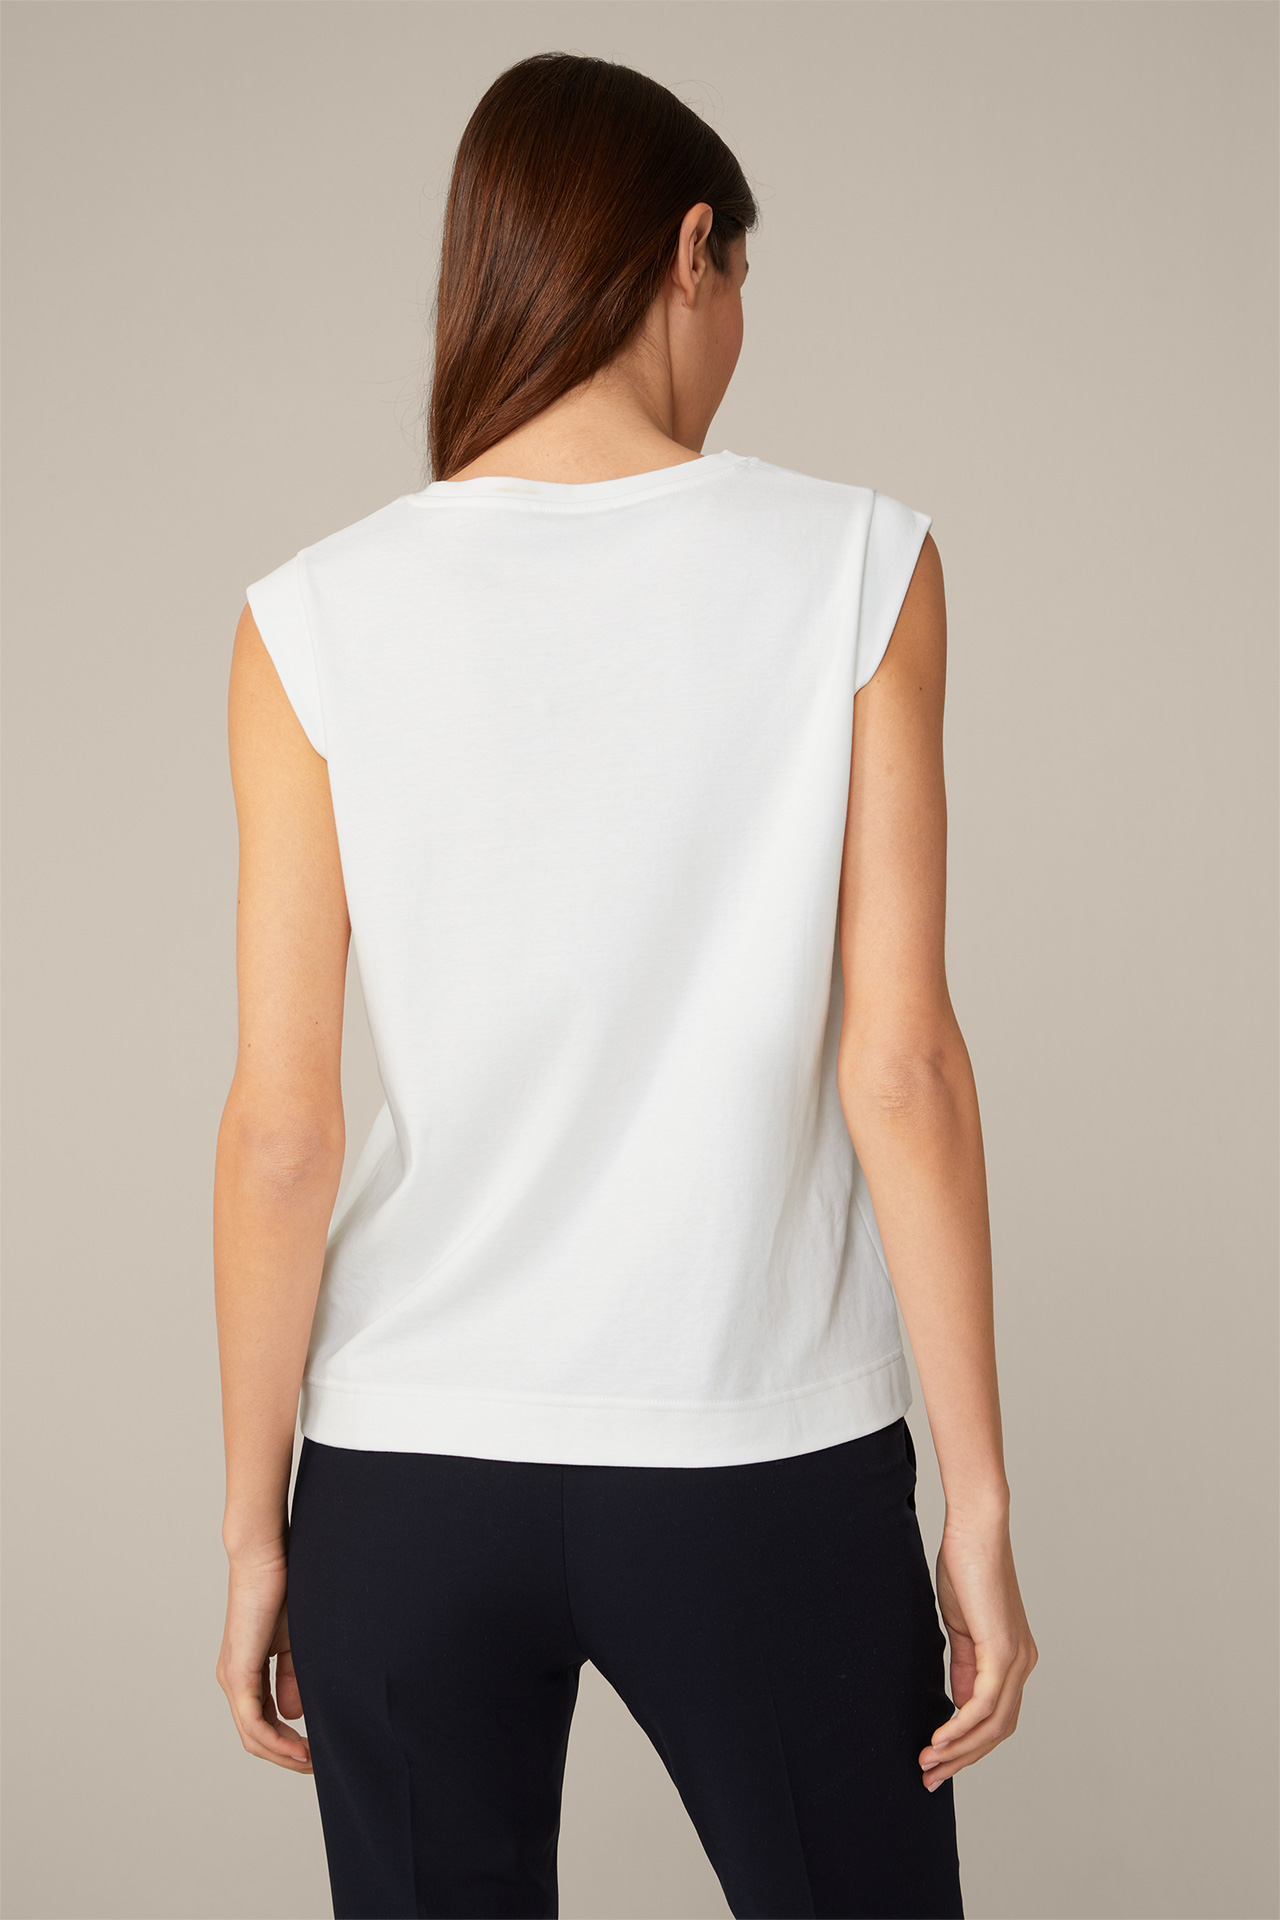 Cotton Interlock Shirt in Sleeveless Design in White